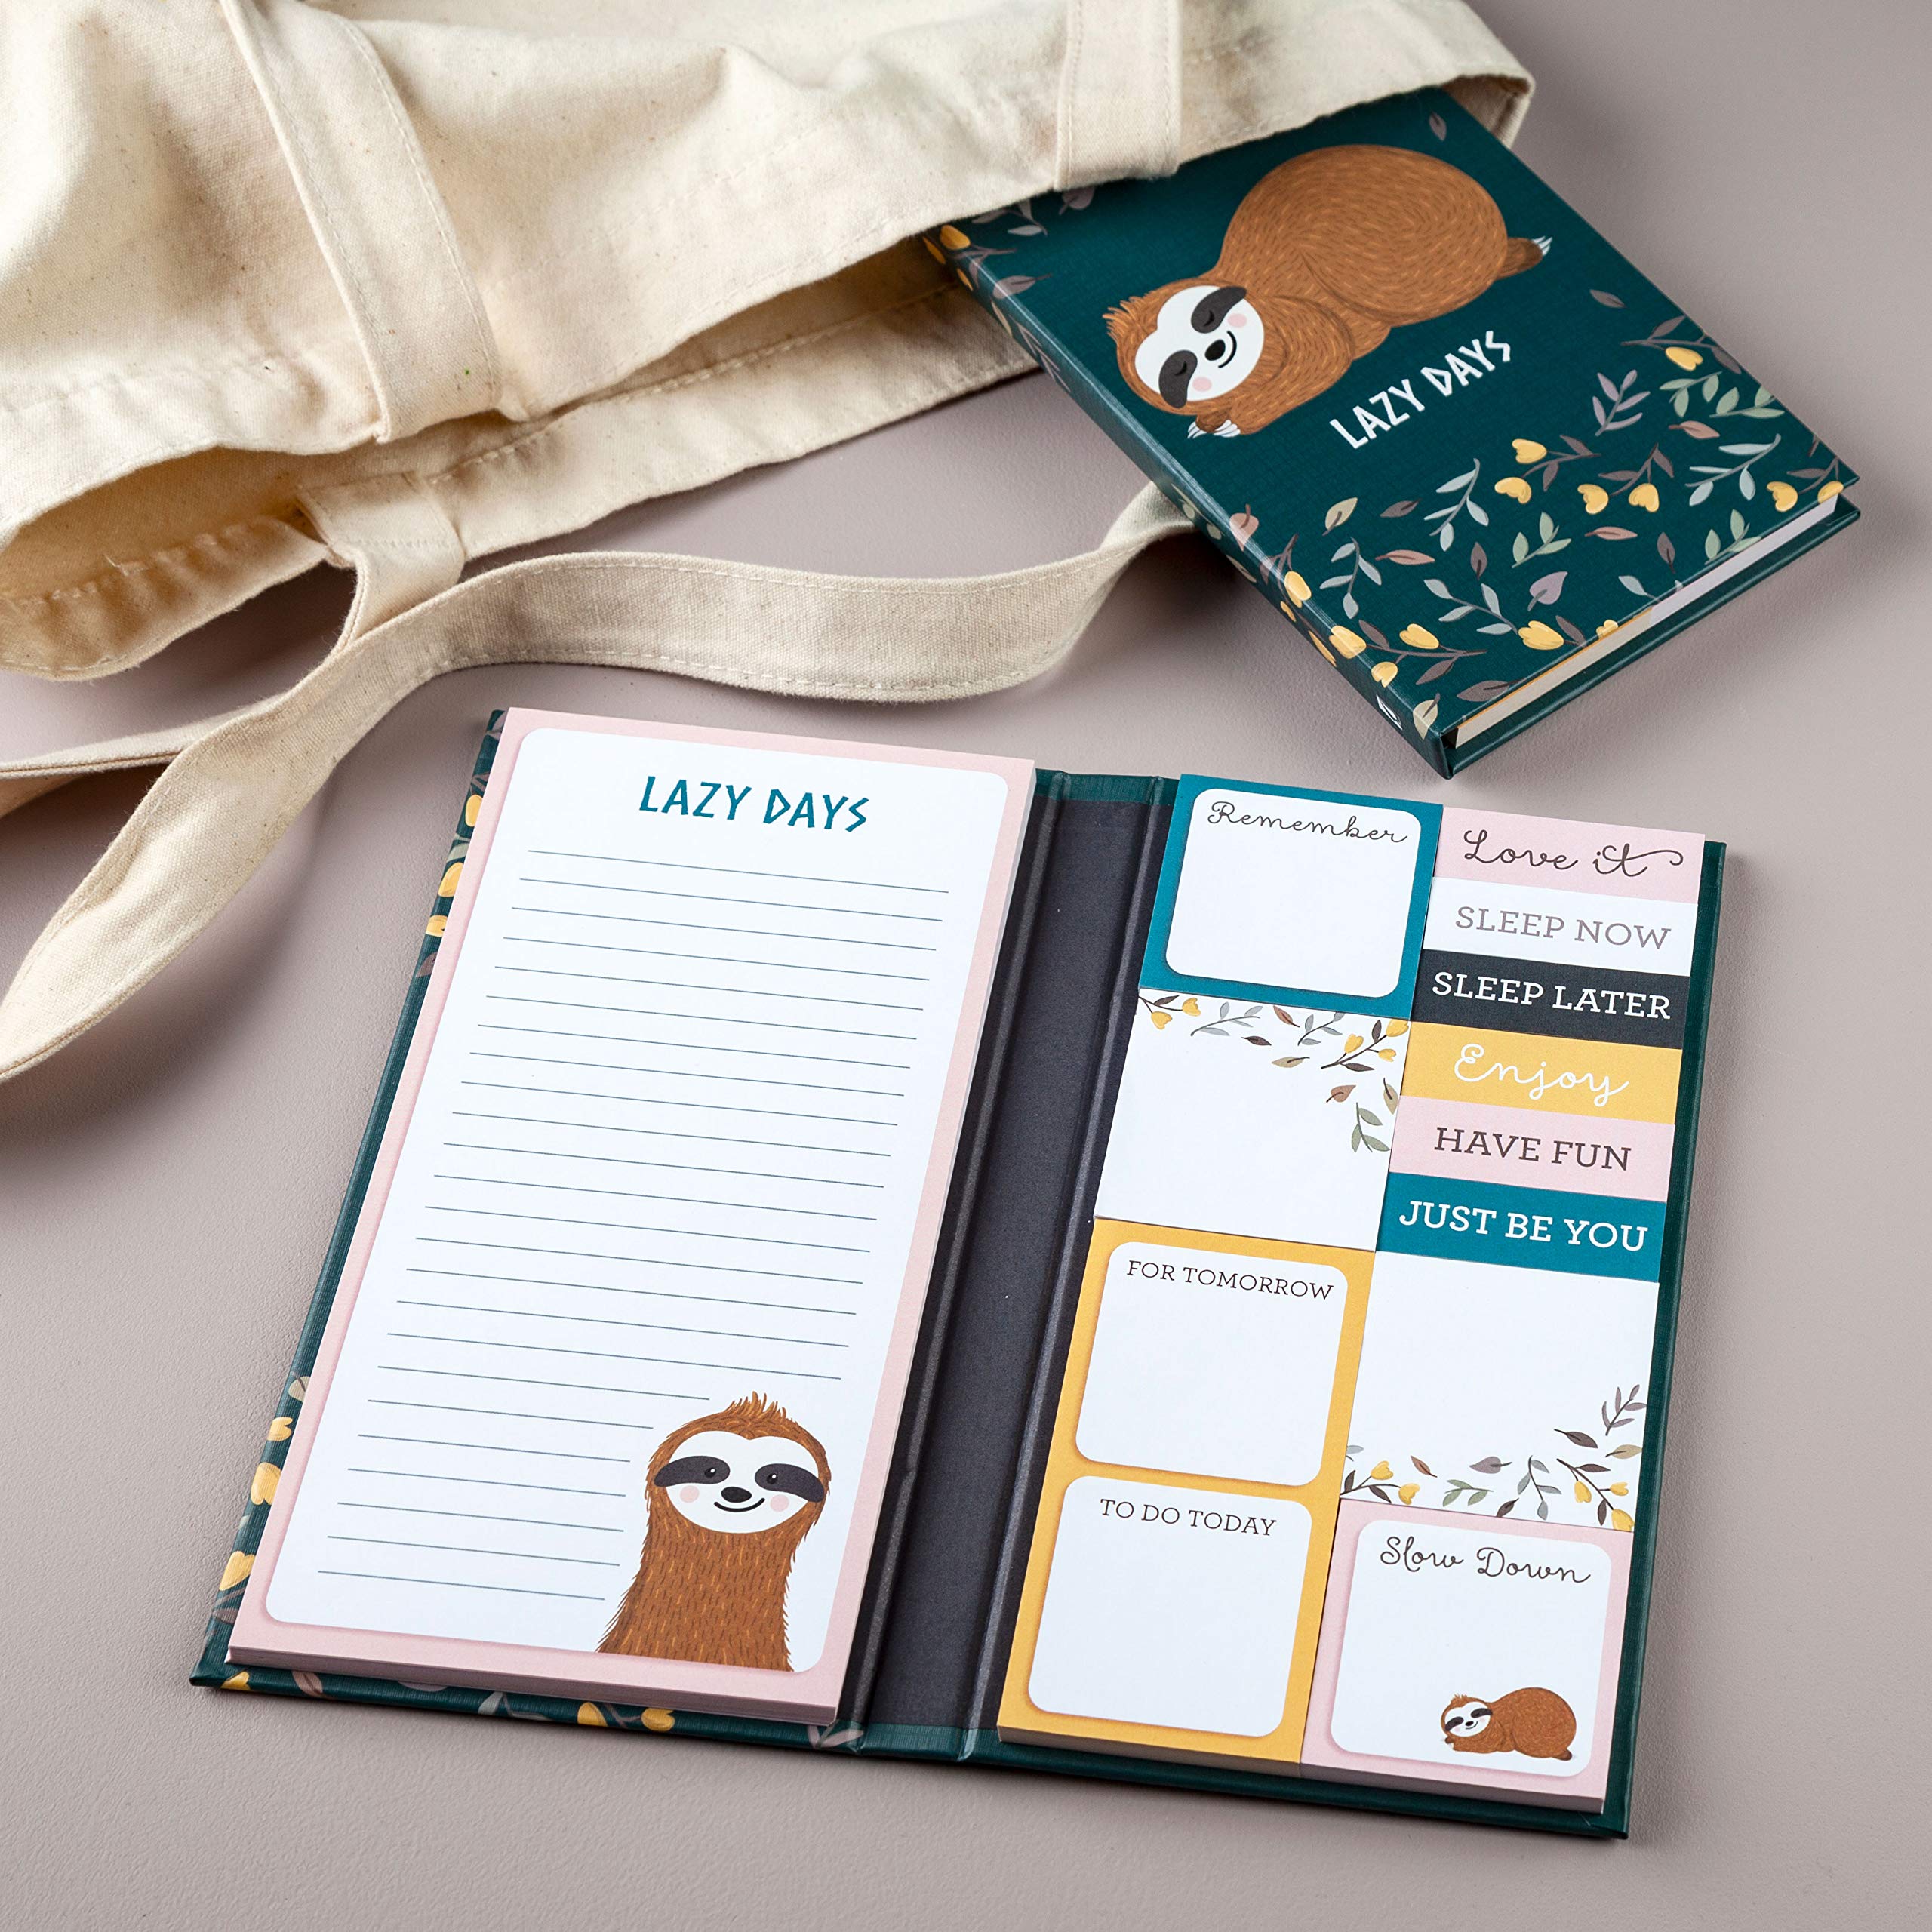 sloth-gifts-sticky-notes